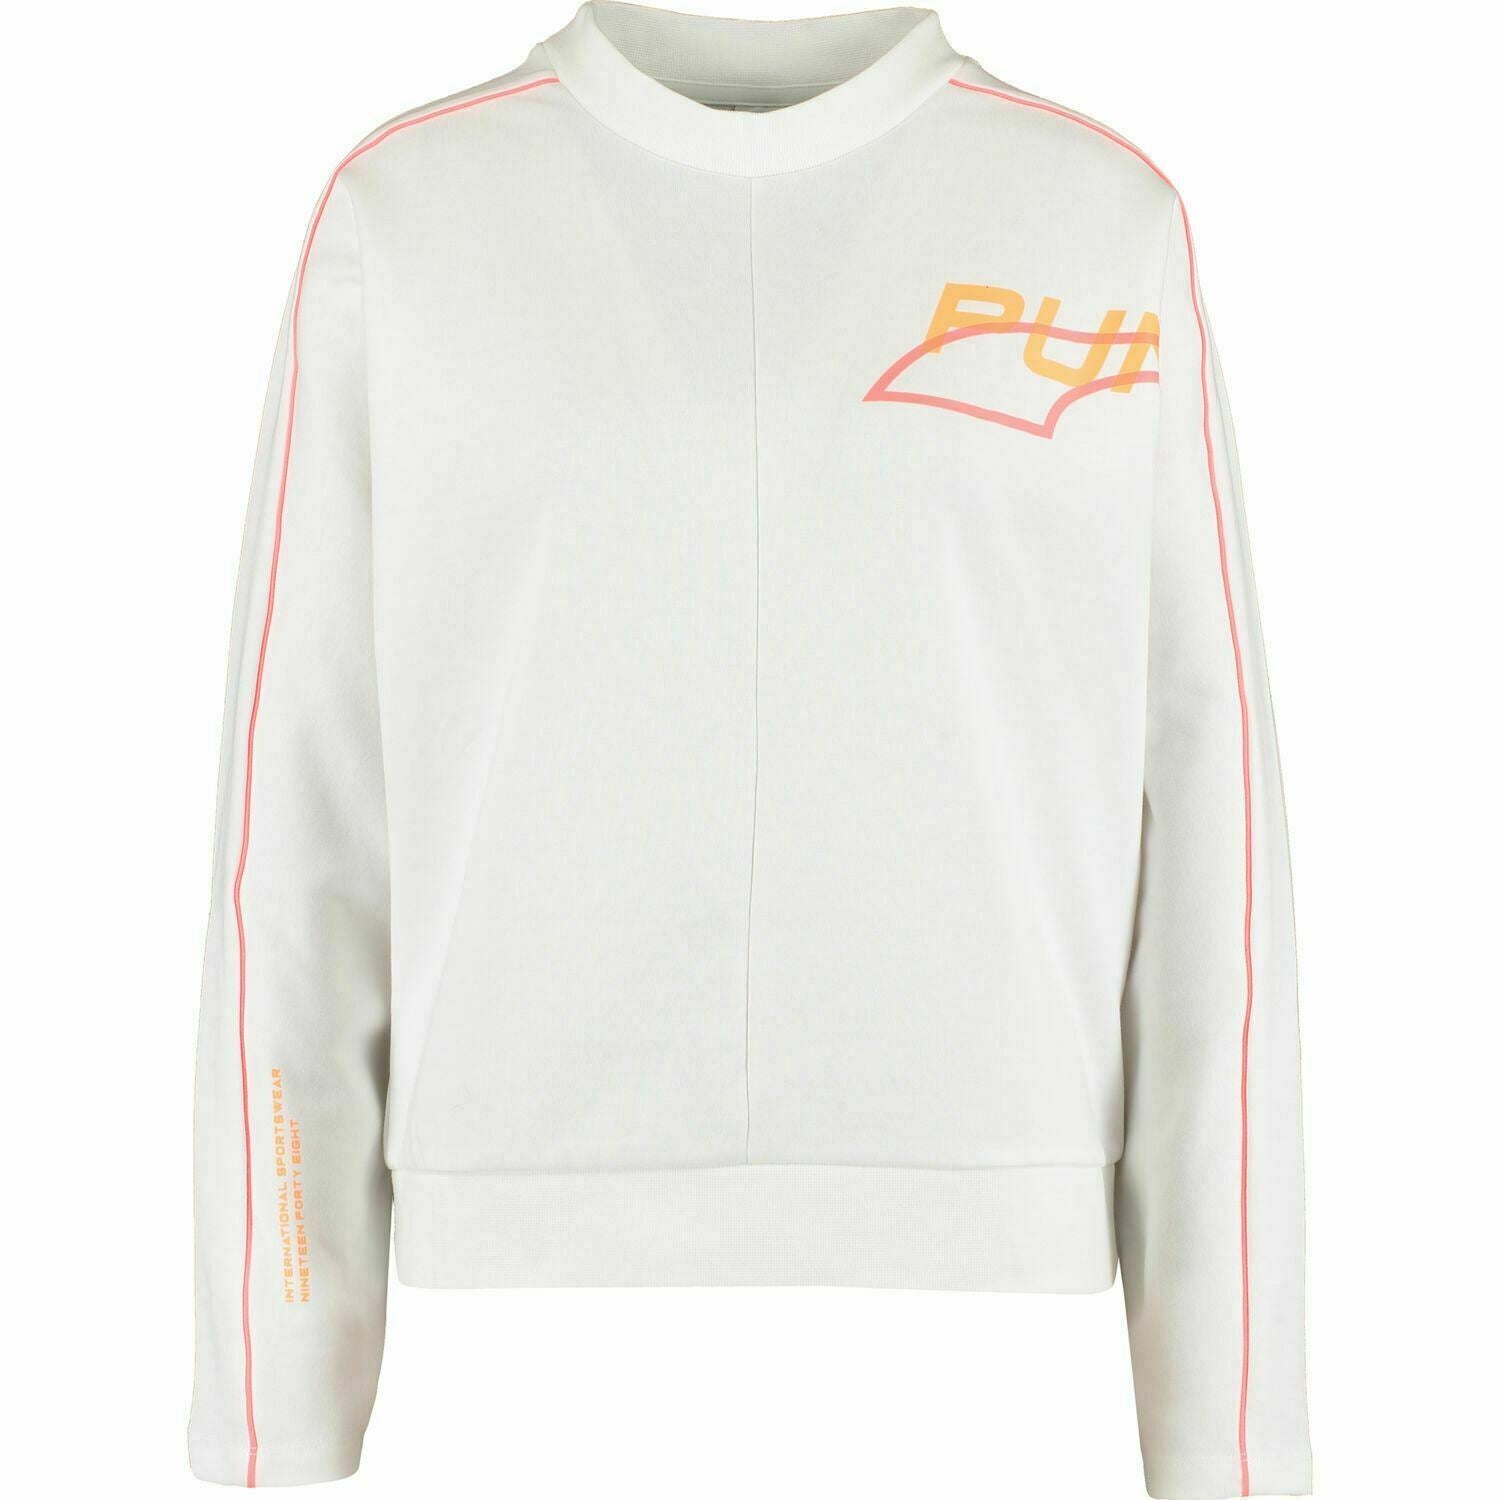 PUMA Women's EVIDA Crew Sweatshirt, White/Neon Logo, size L